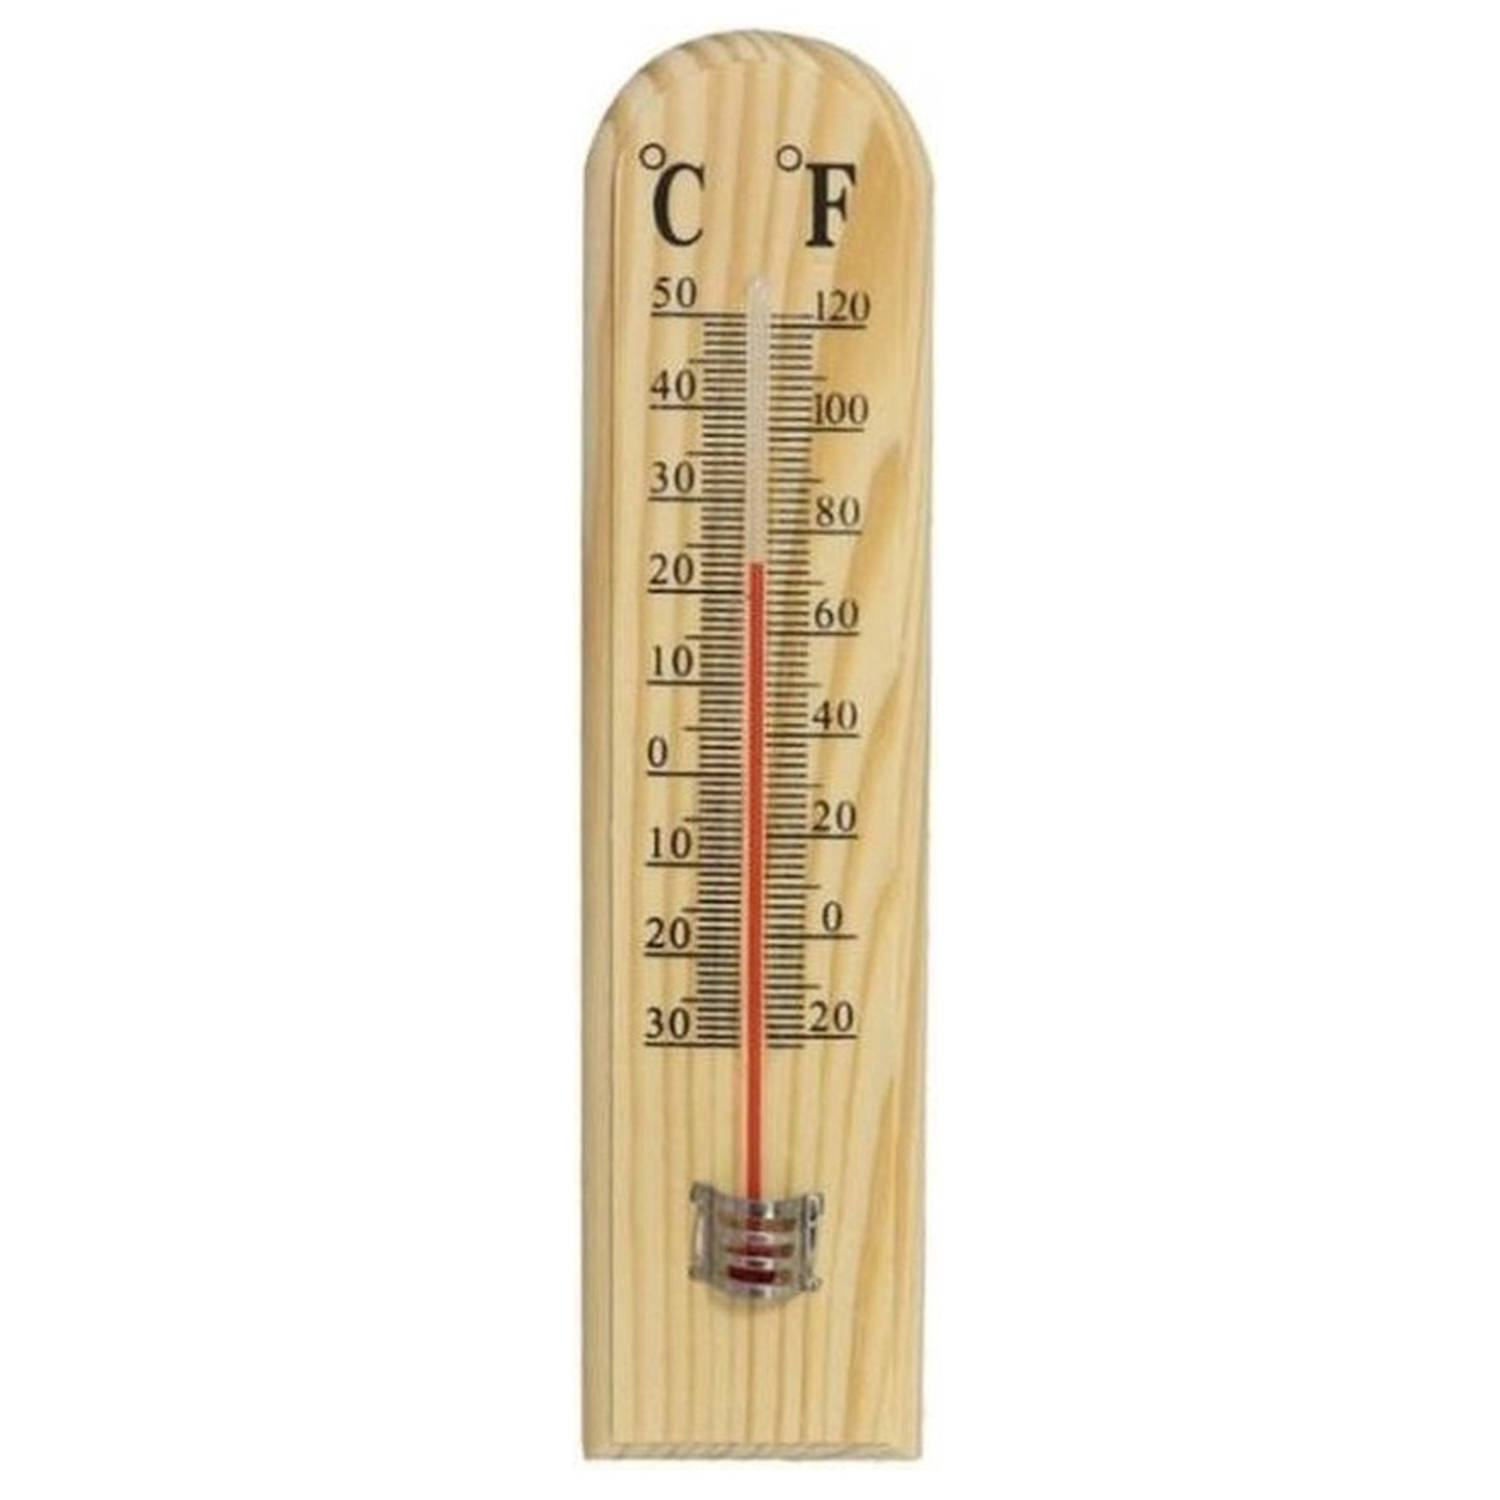 Mark Krijgsgevangene knijpen Binnen/buiten thermometer hout 20 x 5 cm - Buitenthermometers | Blokker